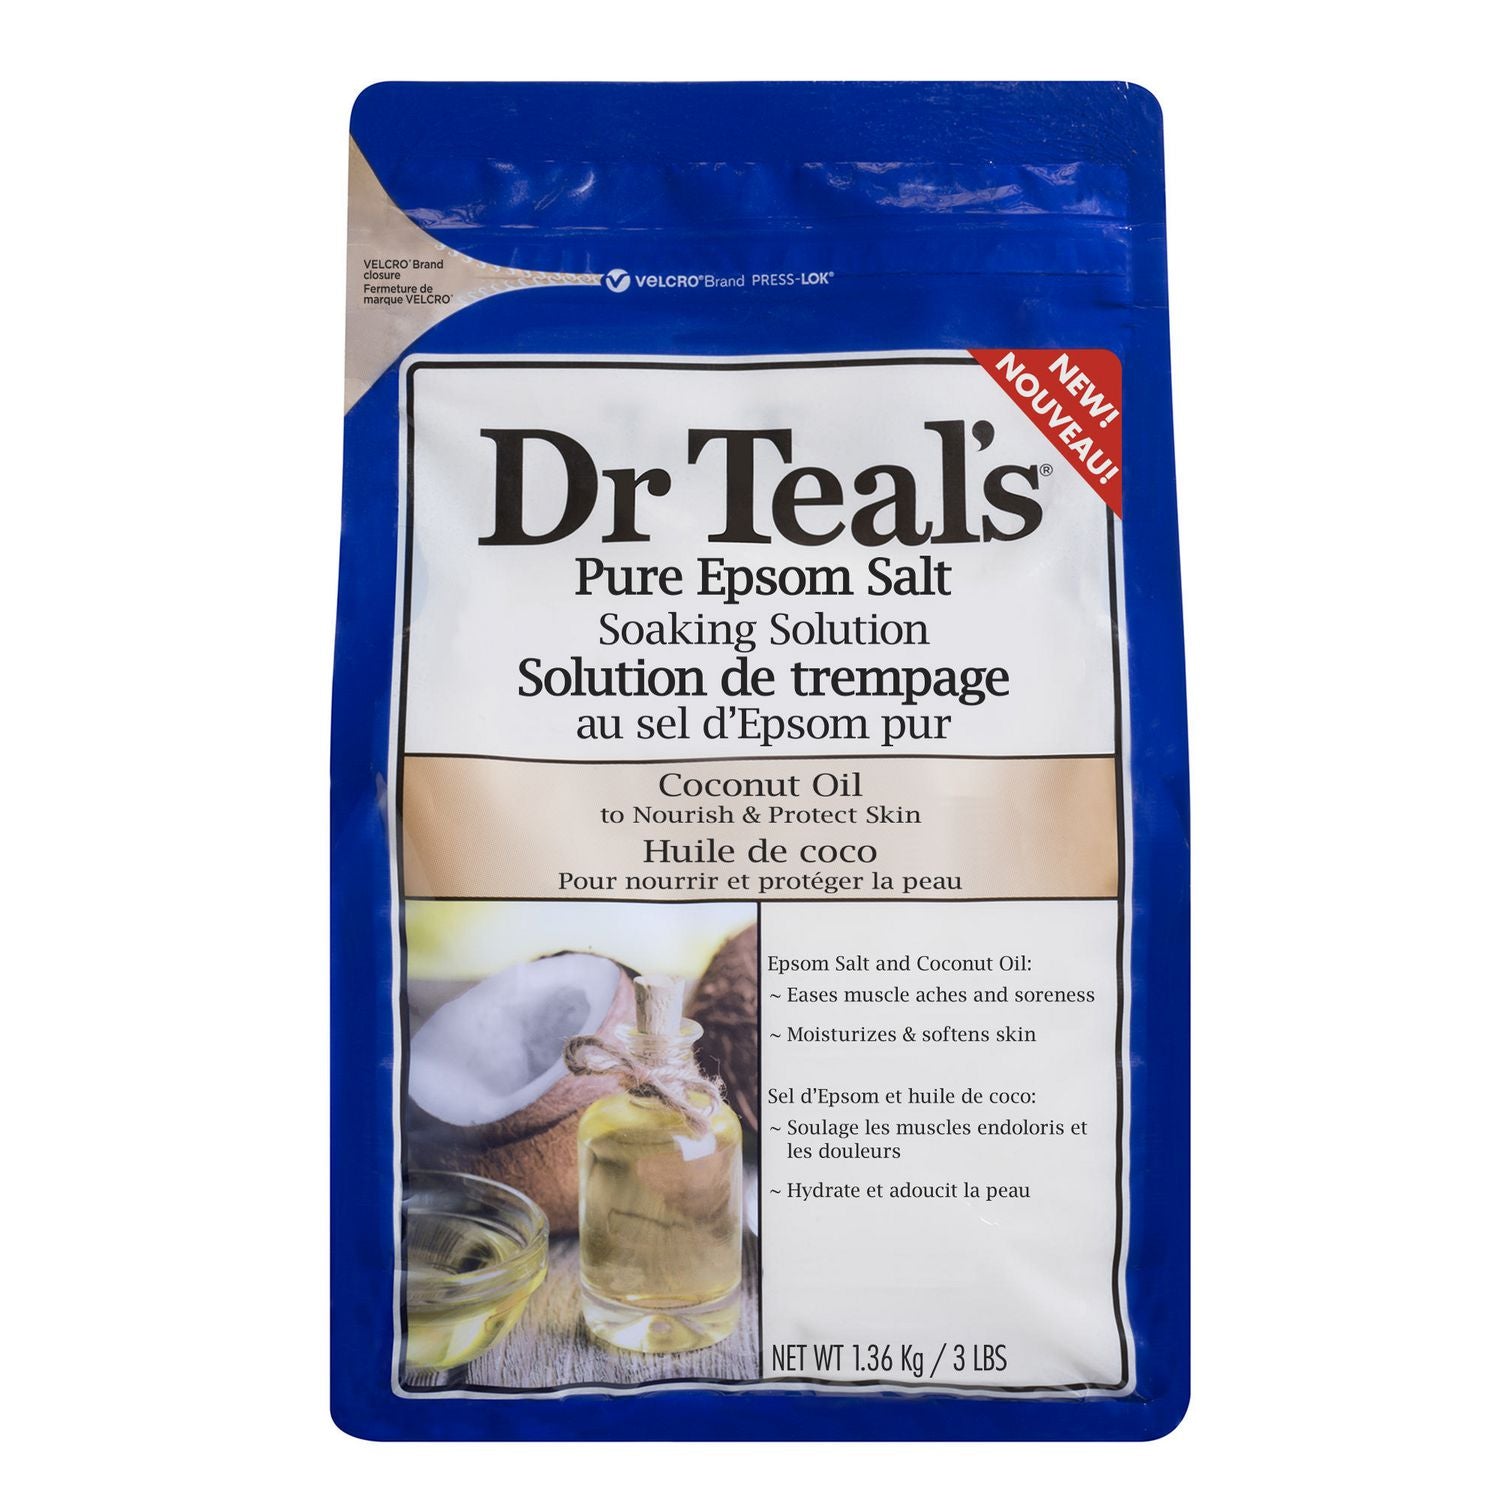 Dr. Teal's Coconut Oil Pure Epsom Salt Soaking Solution